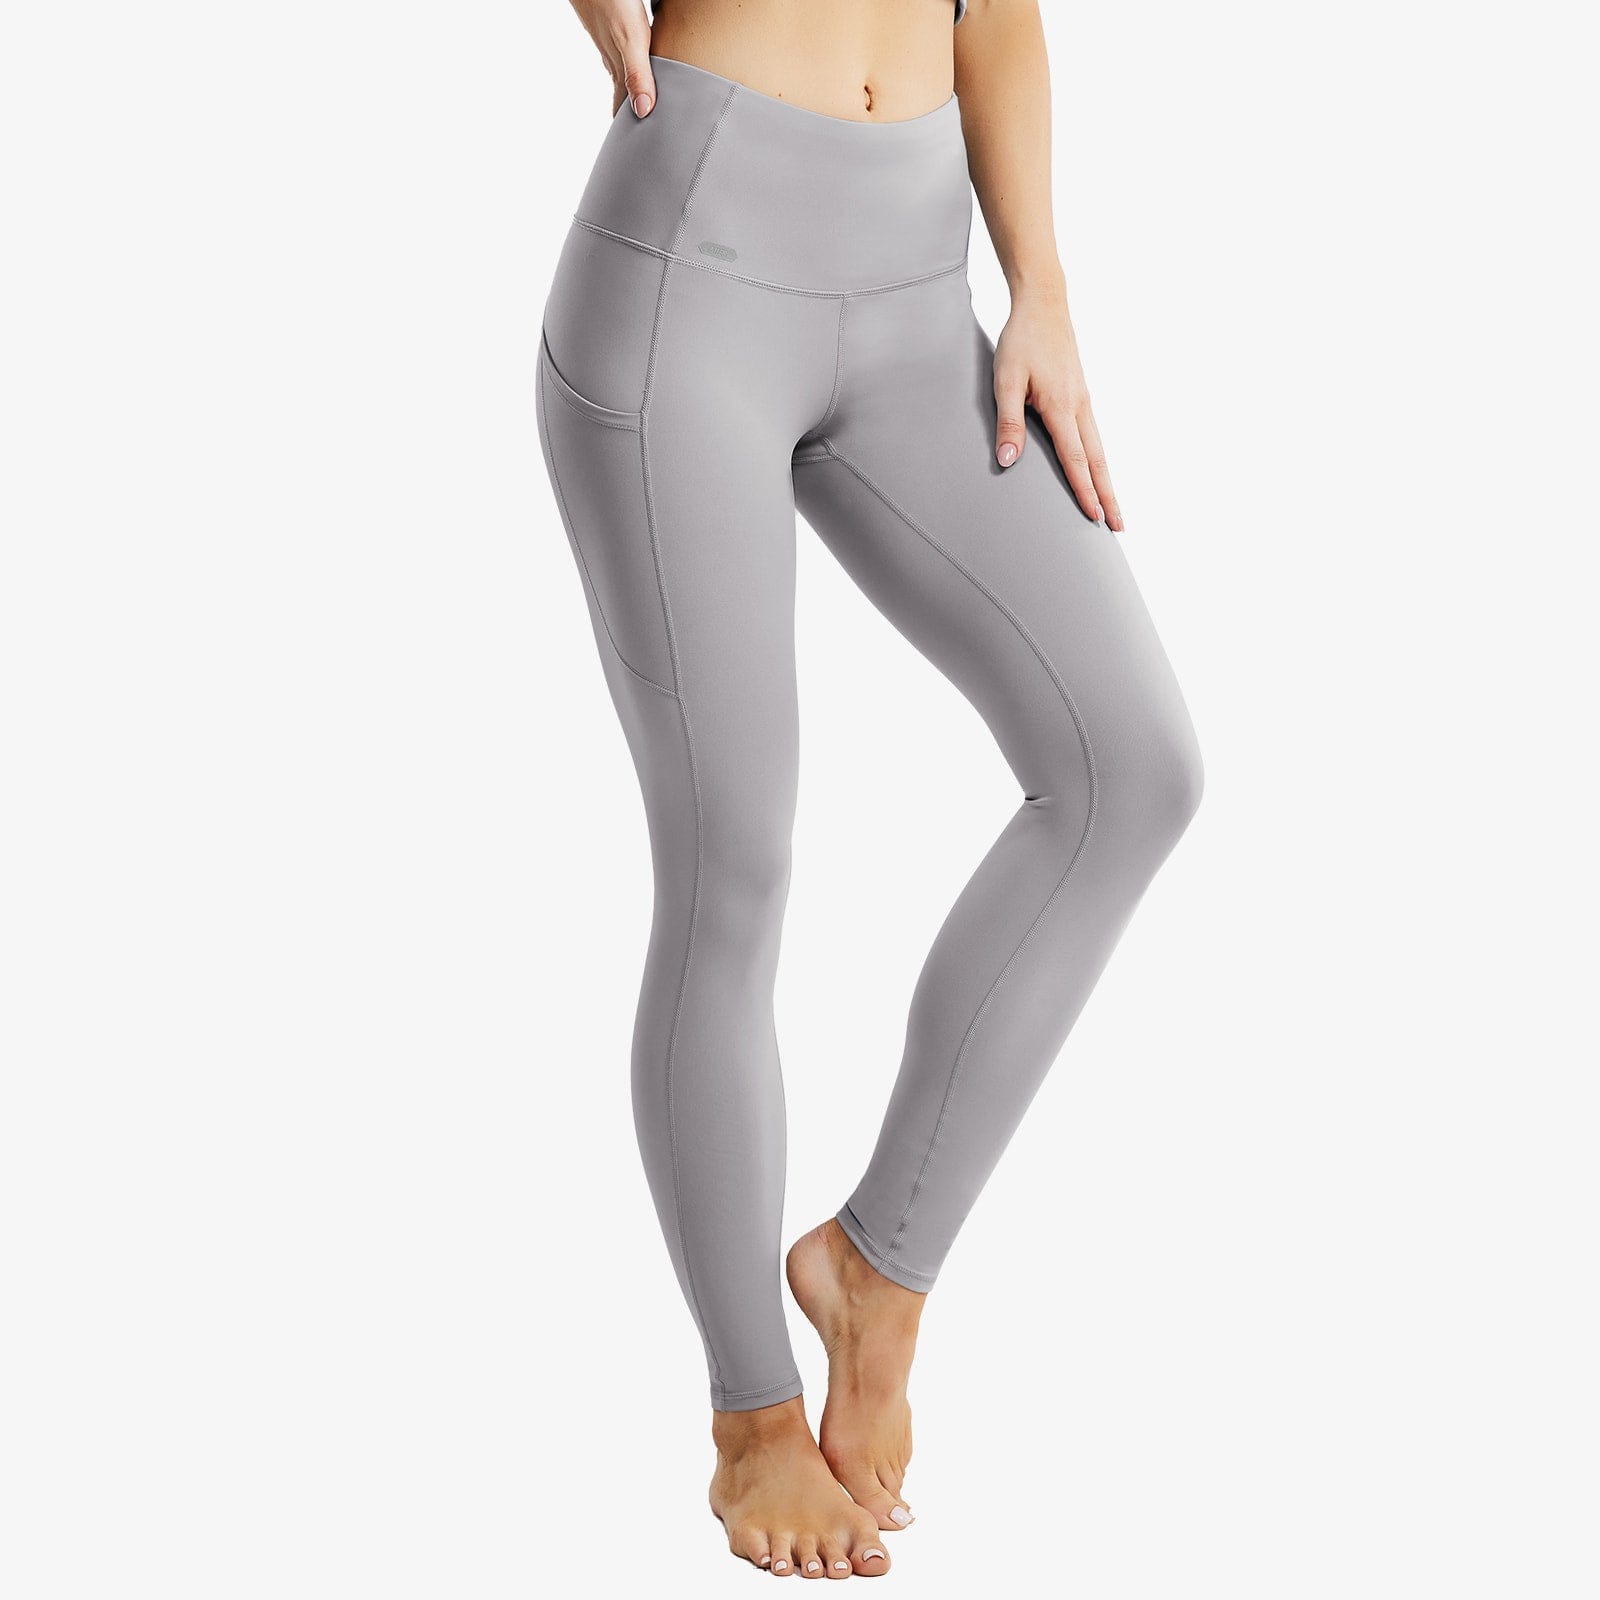 Women's High Waist Yoga Pants with Pockets, Full Length - Grey / S